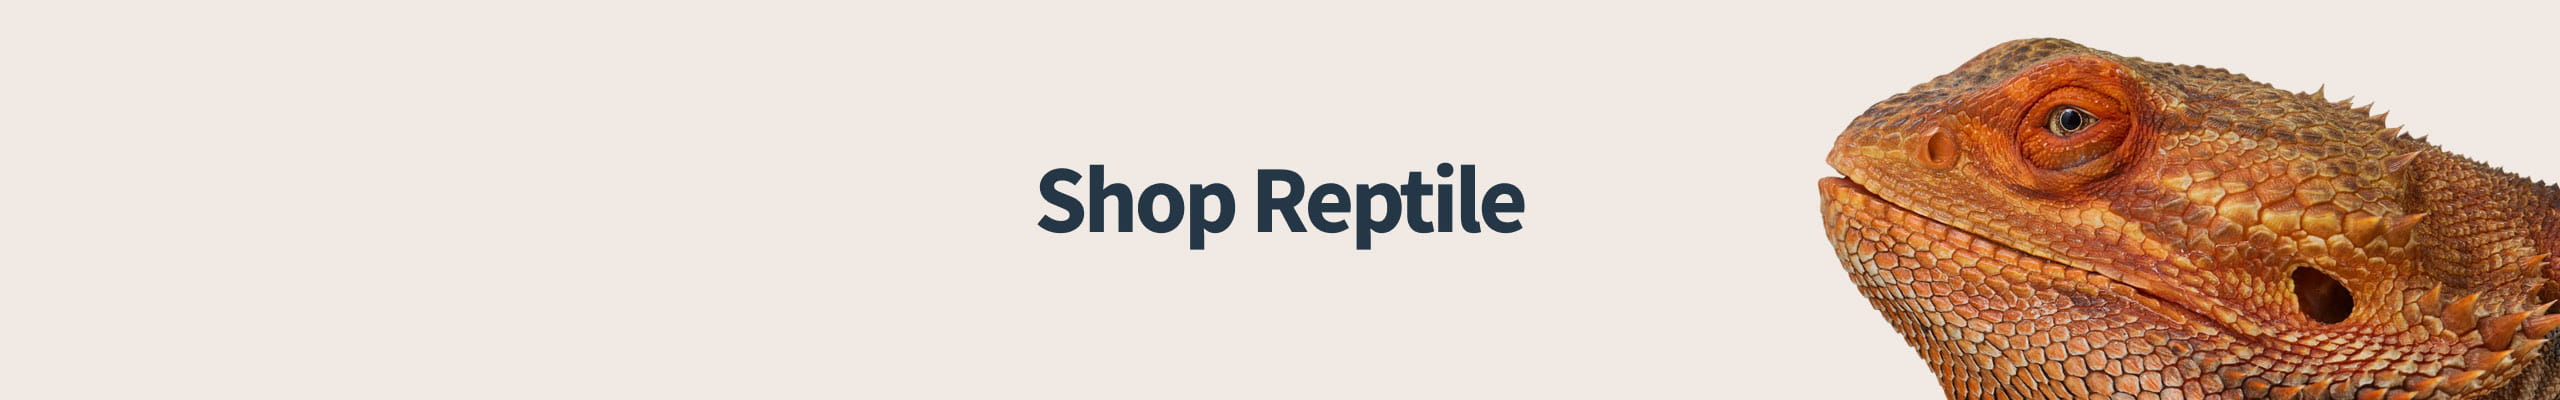 Shop by Pet - Reptile Hero Banner